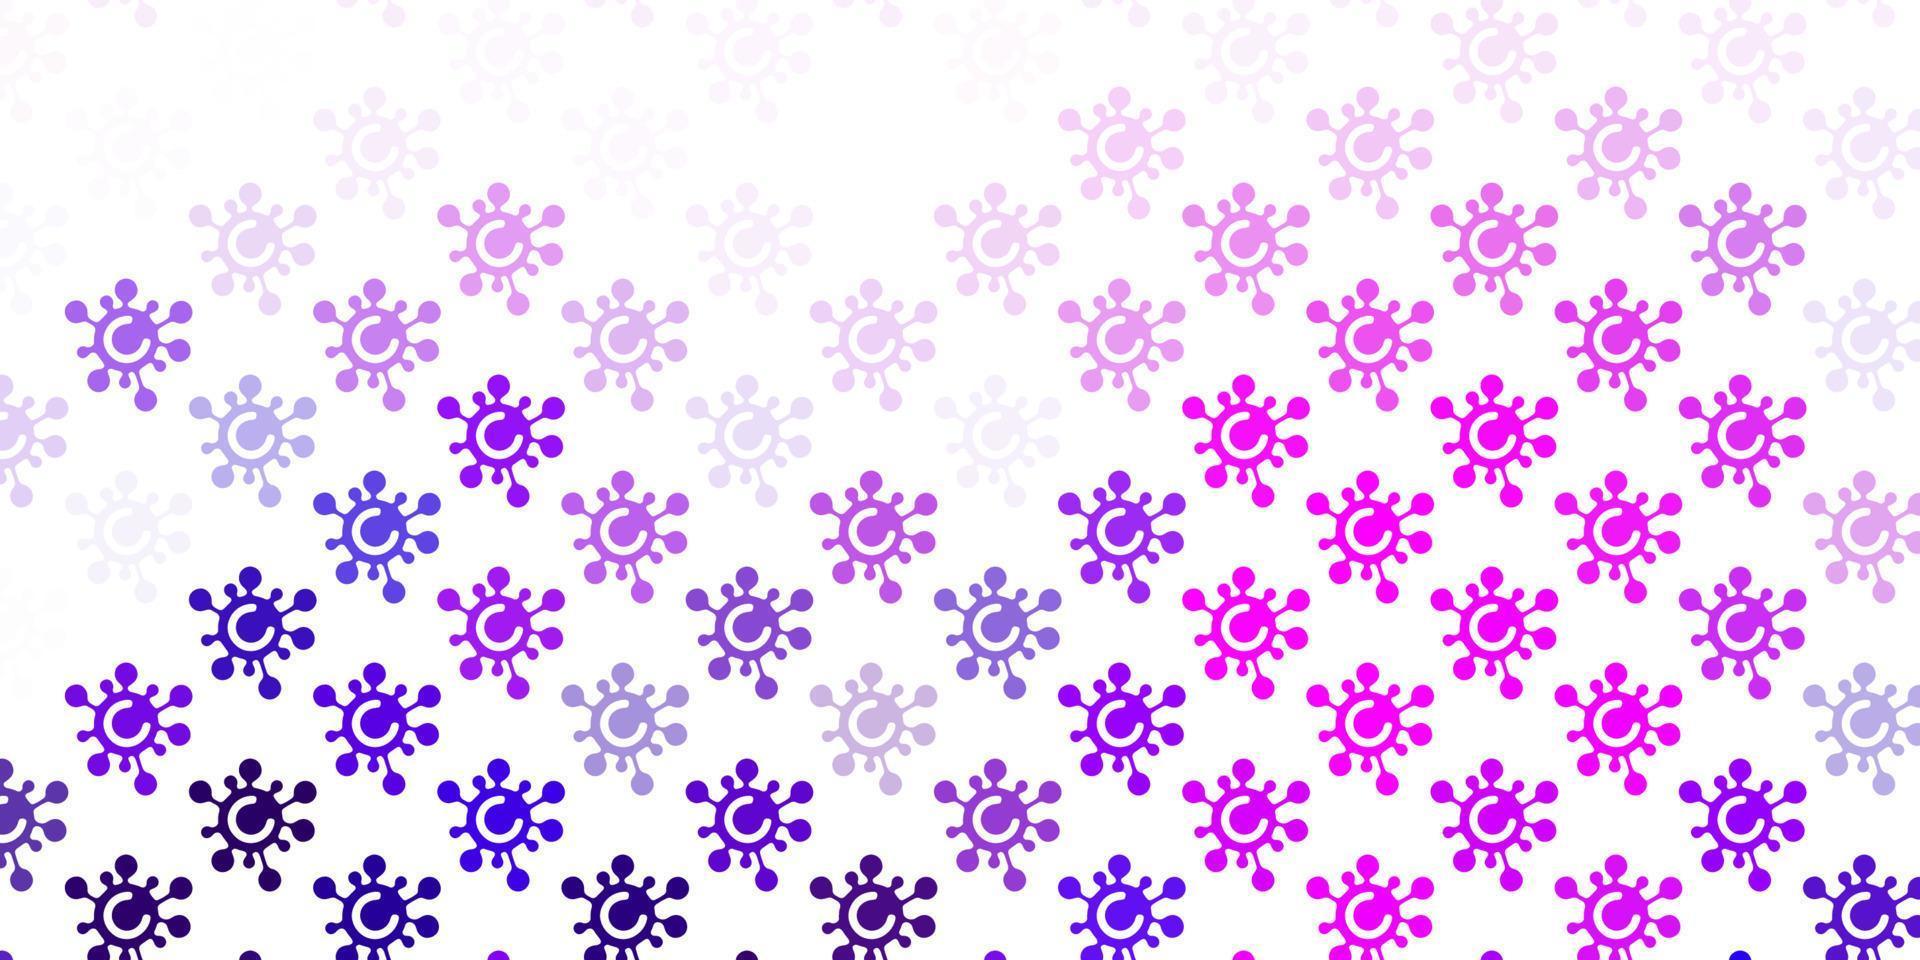 hellvioletter, rosa Vektorhintergrund mit Virensymbolen. vektor